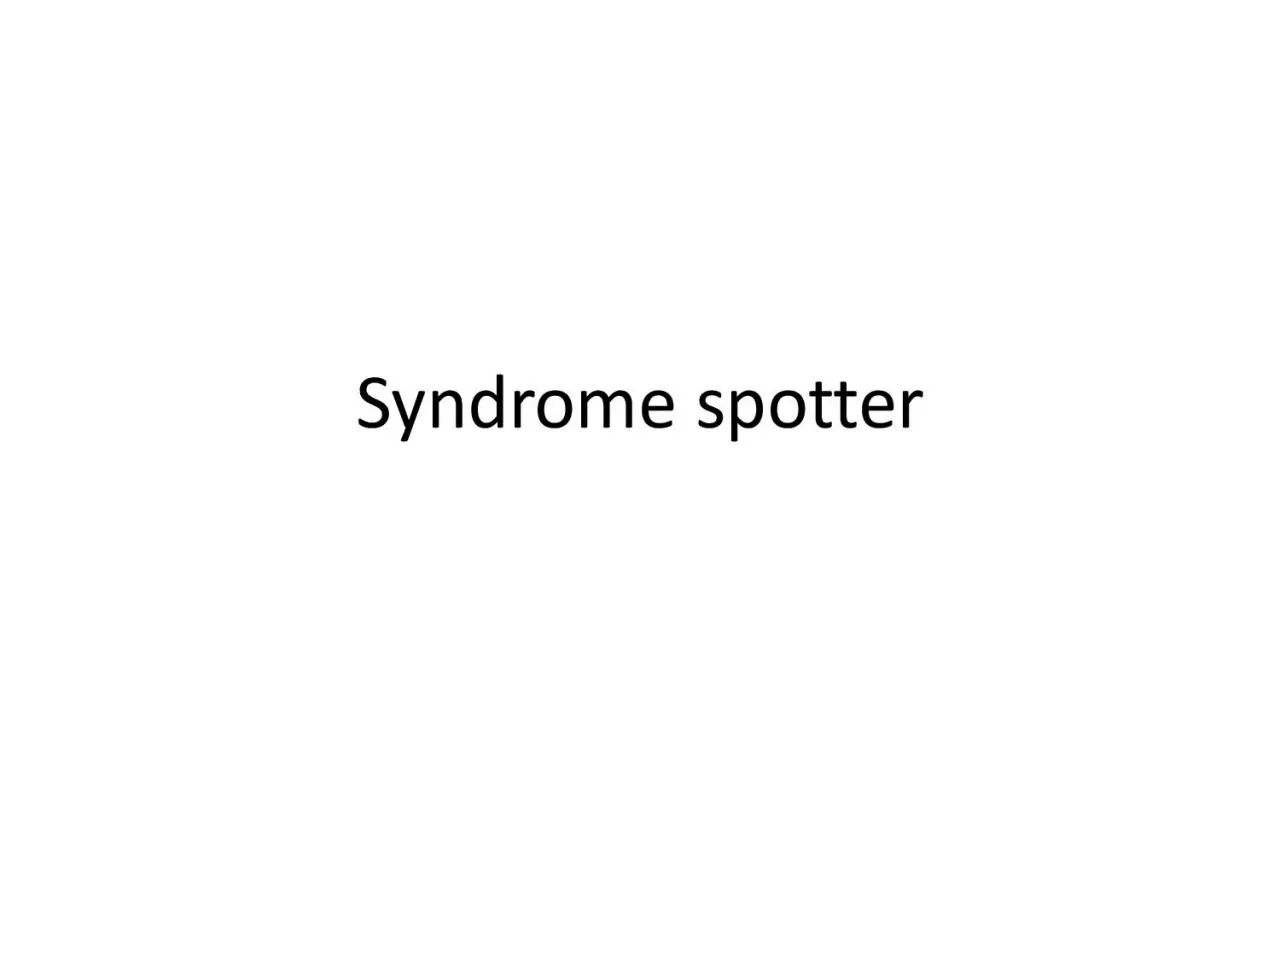 Syndrome spotter